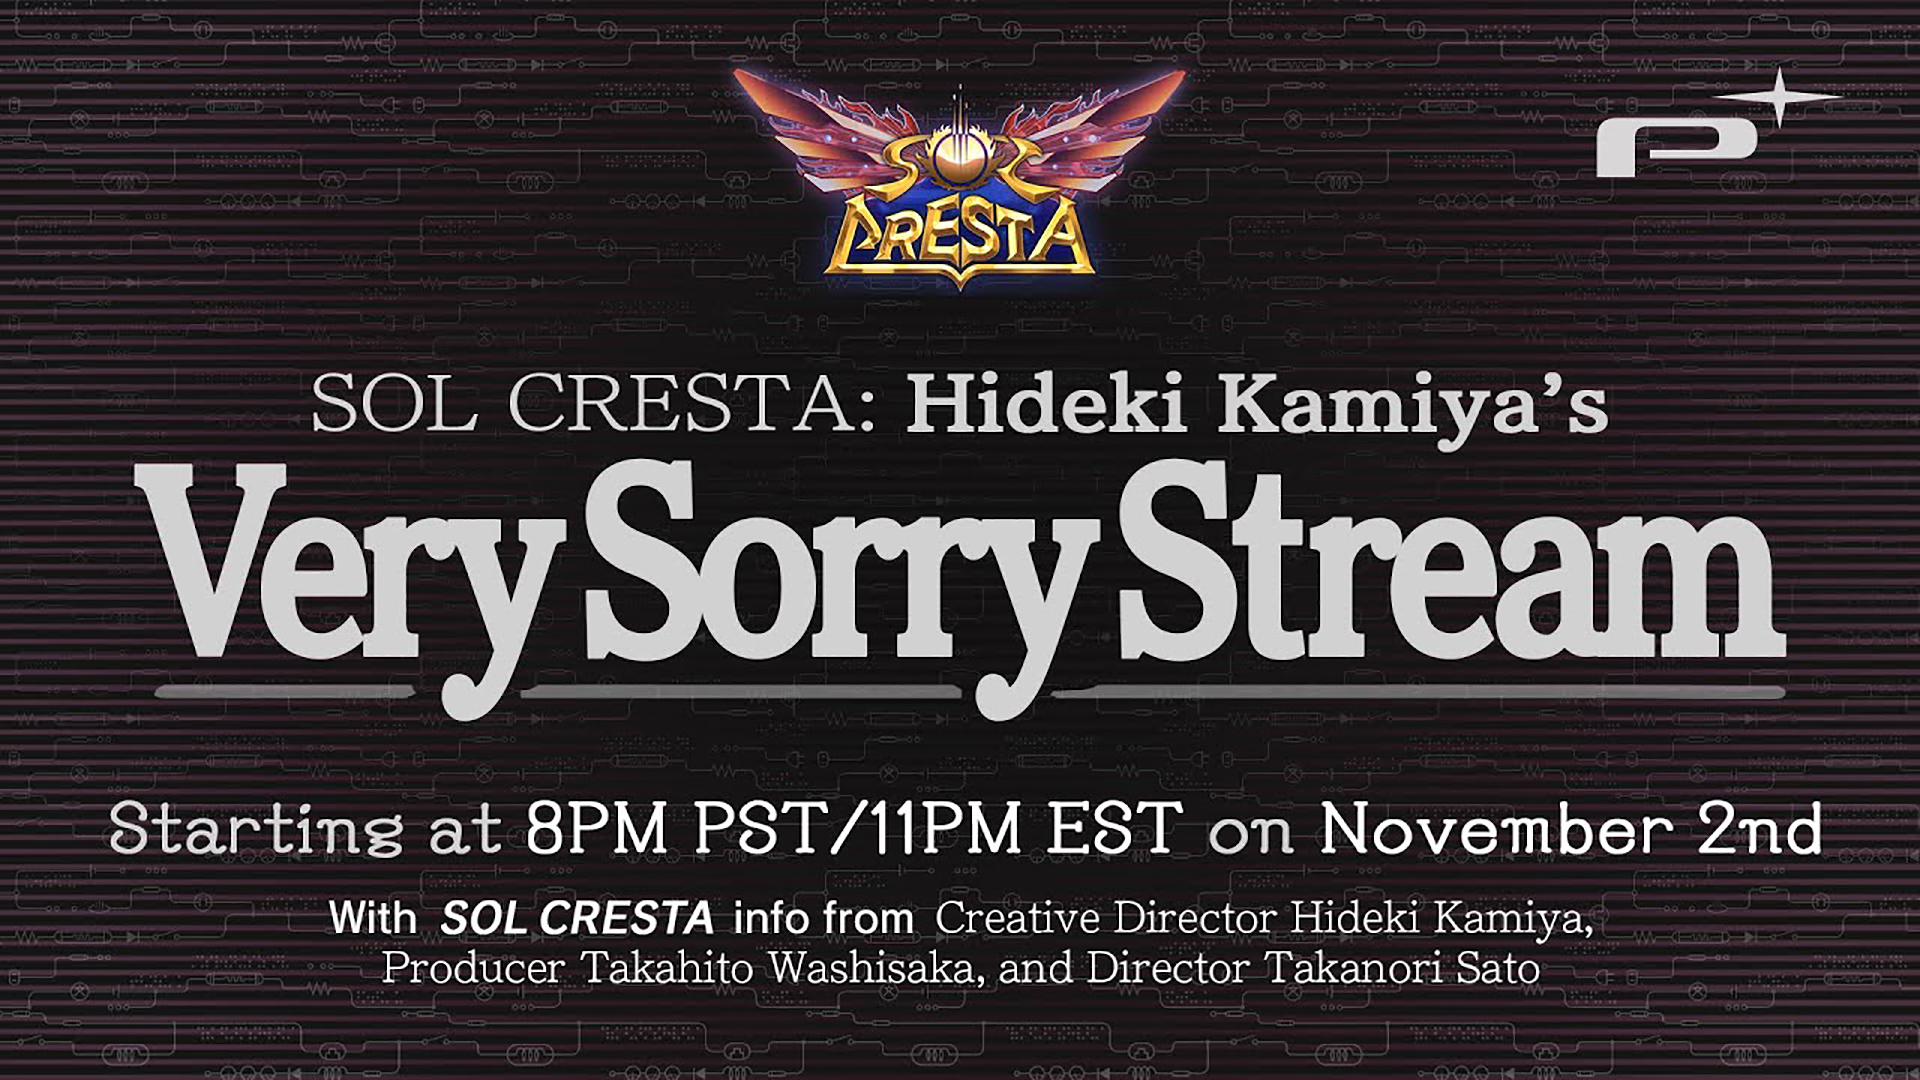 PlatinumGames เตรียมจัดงาน Sol Cresta: Hideki Kamiya’s Very Sorry Stream ในวันพรุ่งนี้